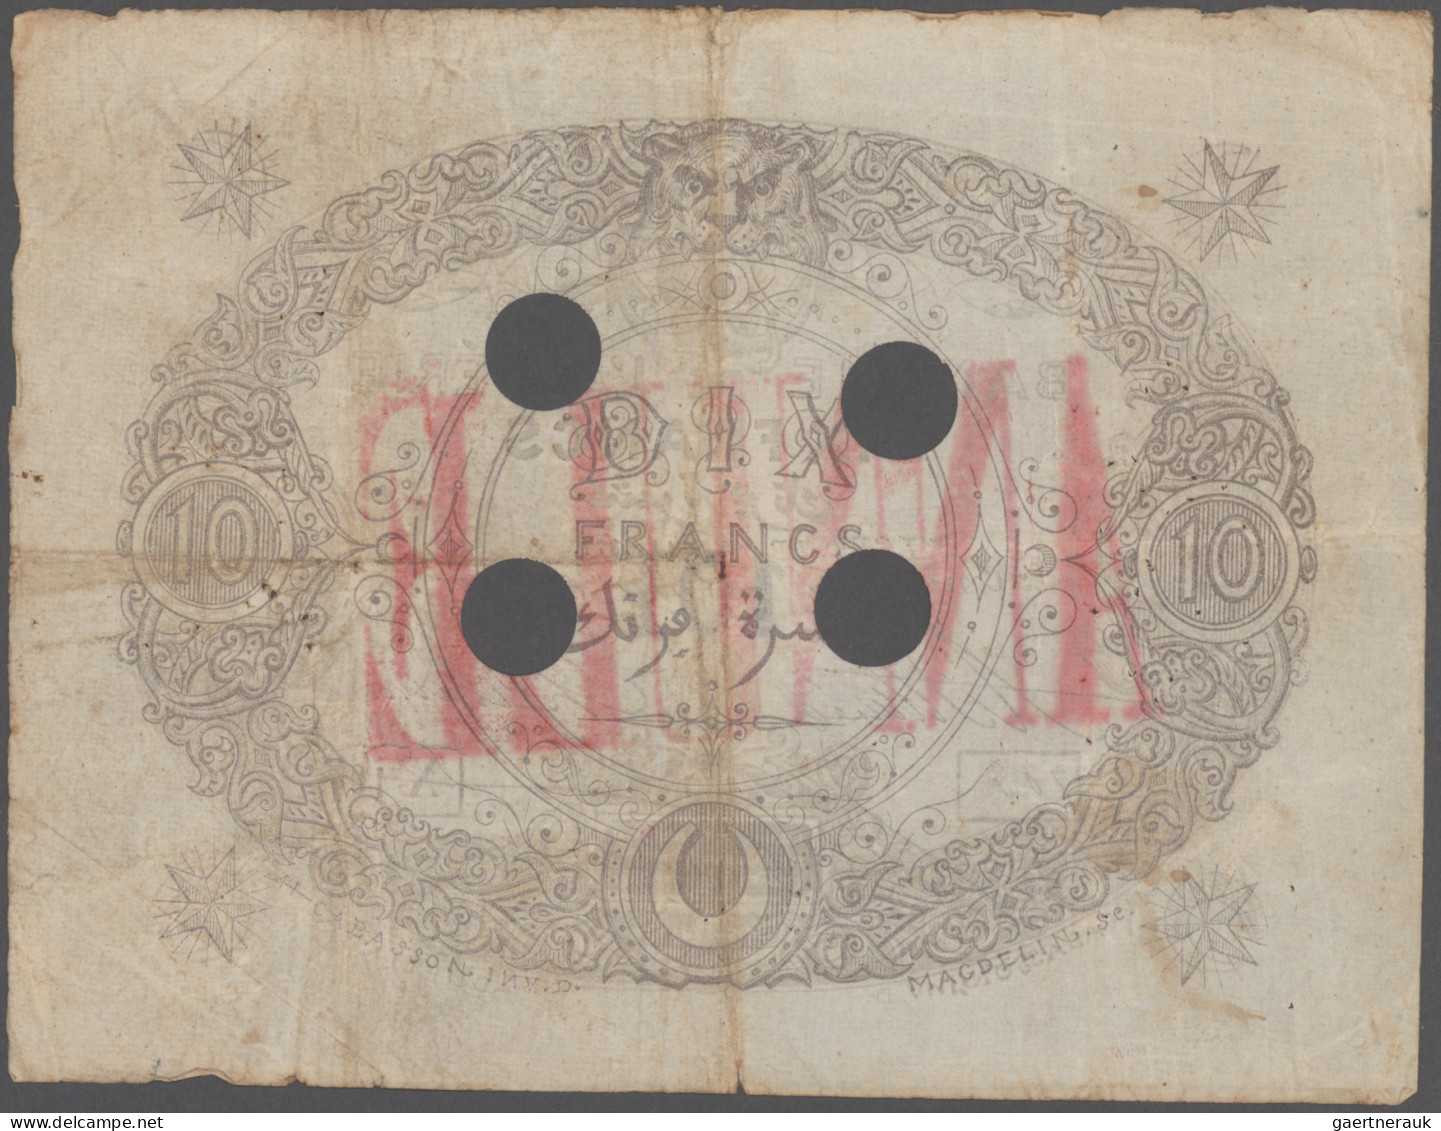 Algeria: Banque De L'Algérie, 10 Francs 15.5.1871, P.14, Cancelled With Overprin - Algerije